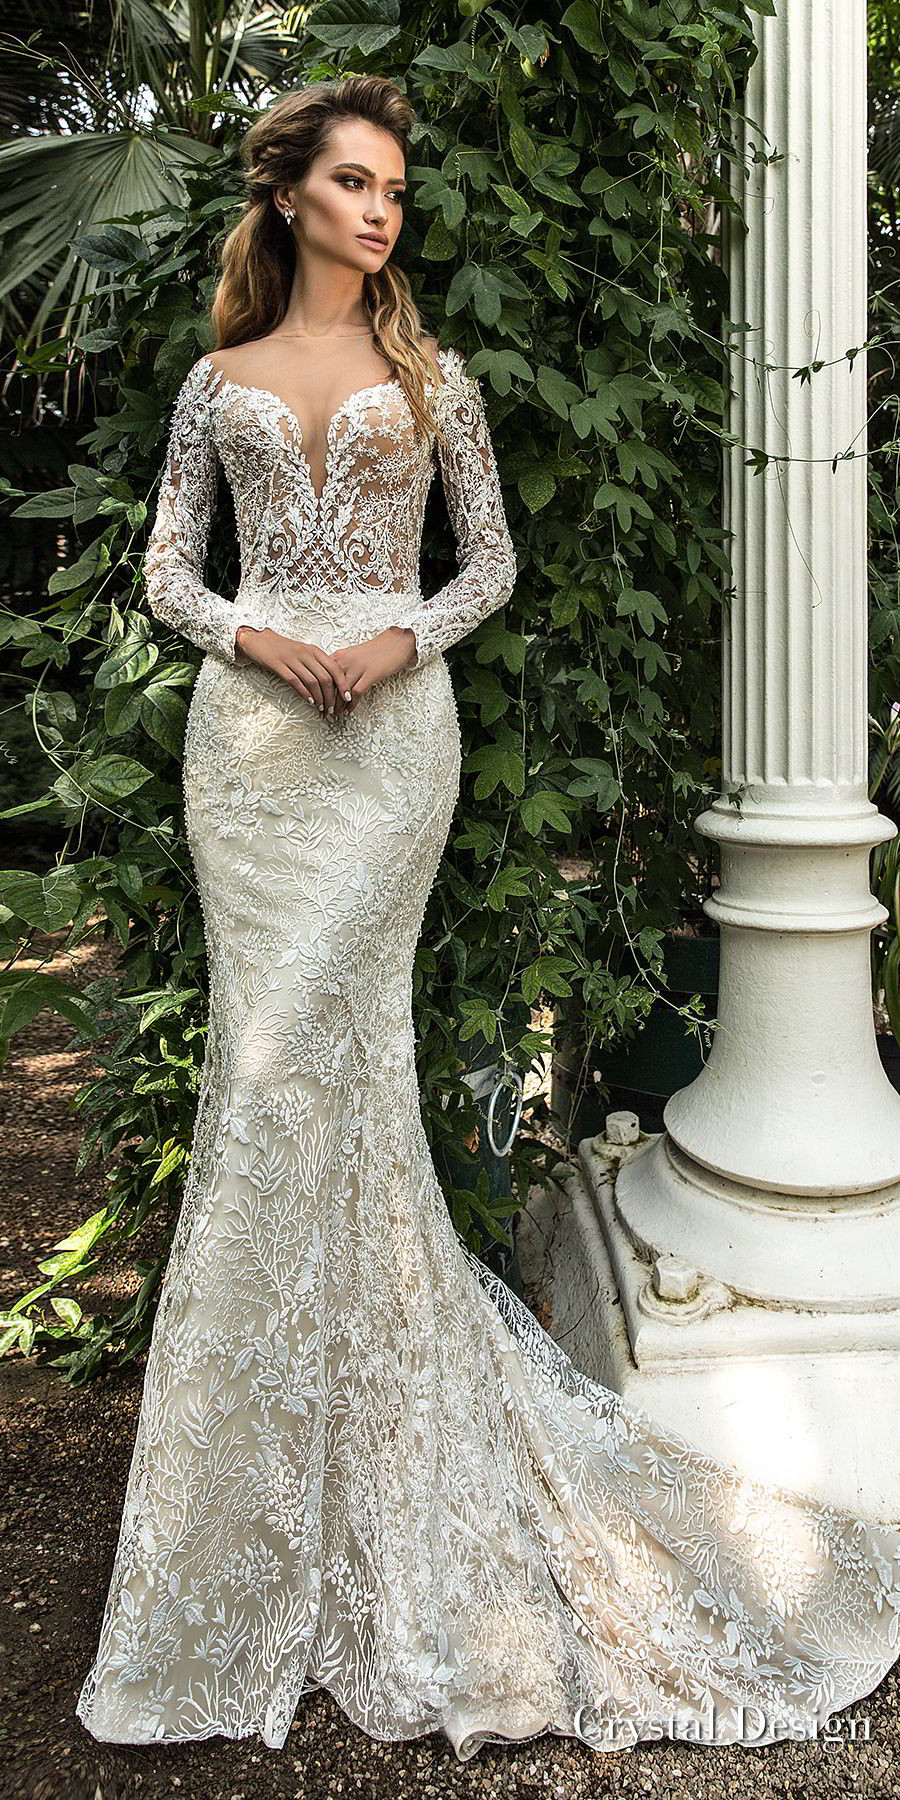 Designer Wedding Gowns
 Crystal Design 2018 Wedding Dresses — “Royal Garden